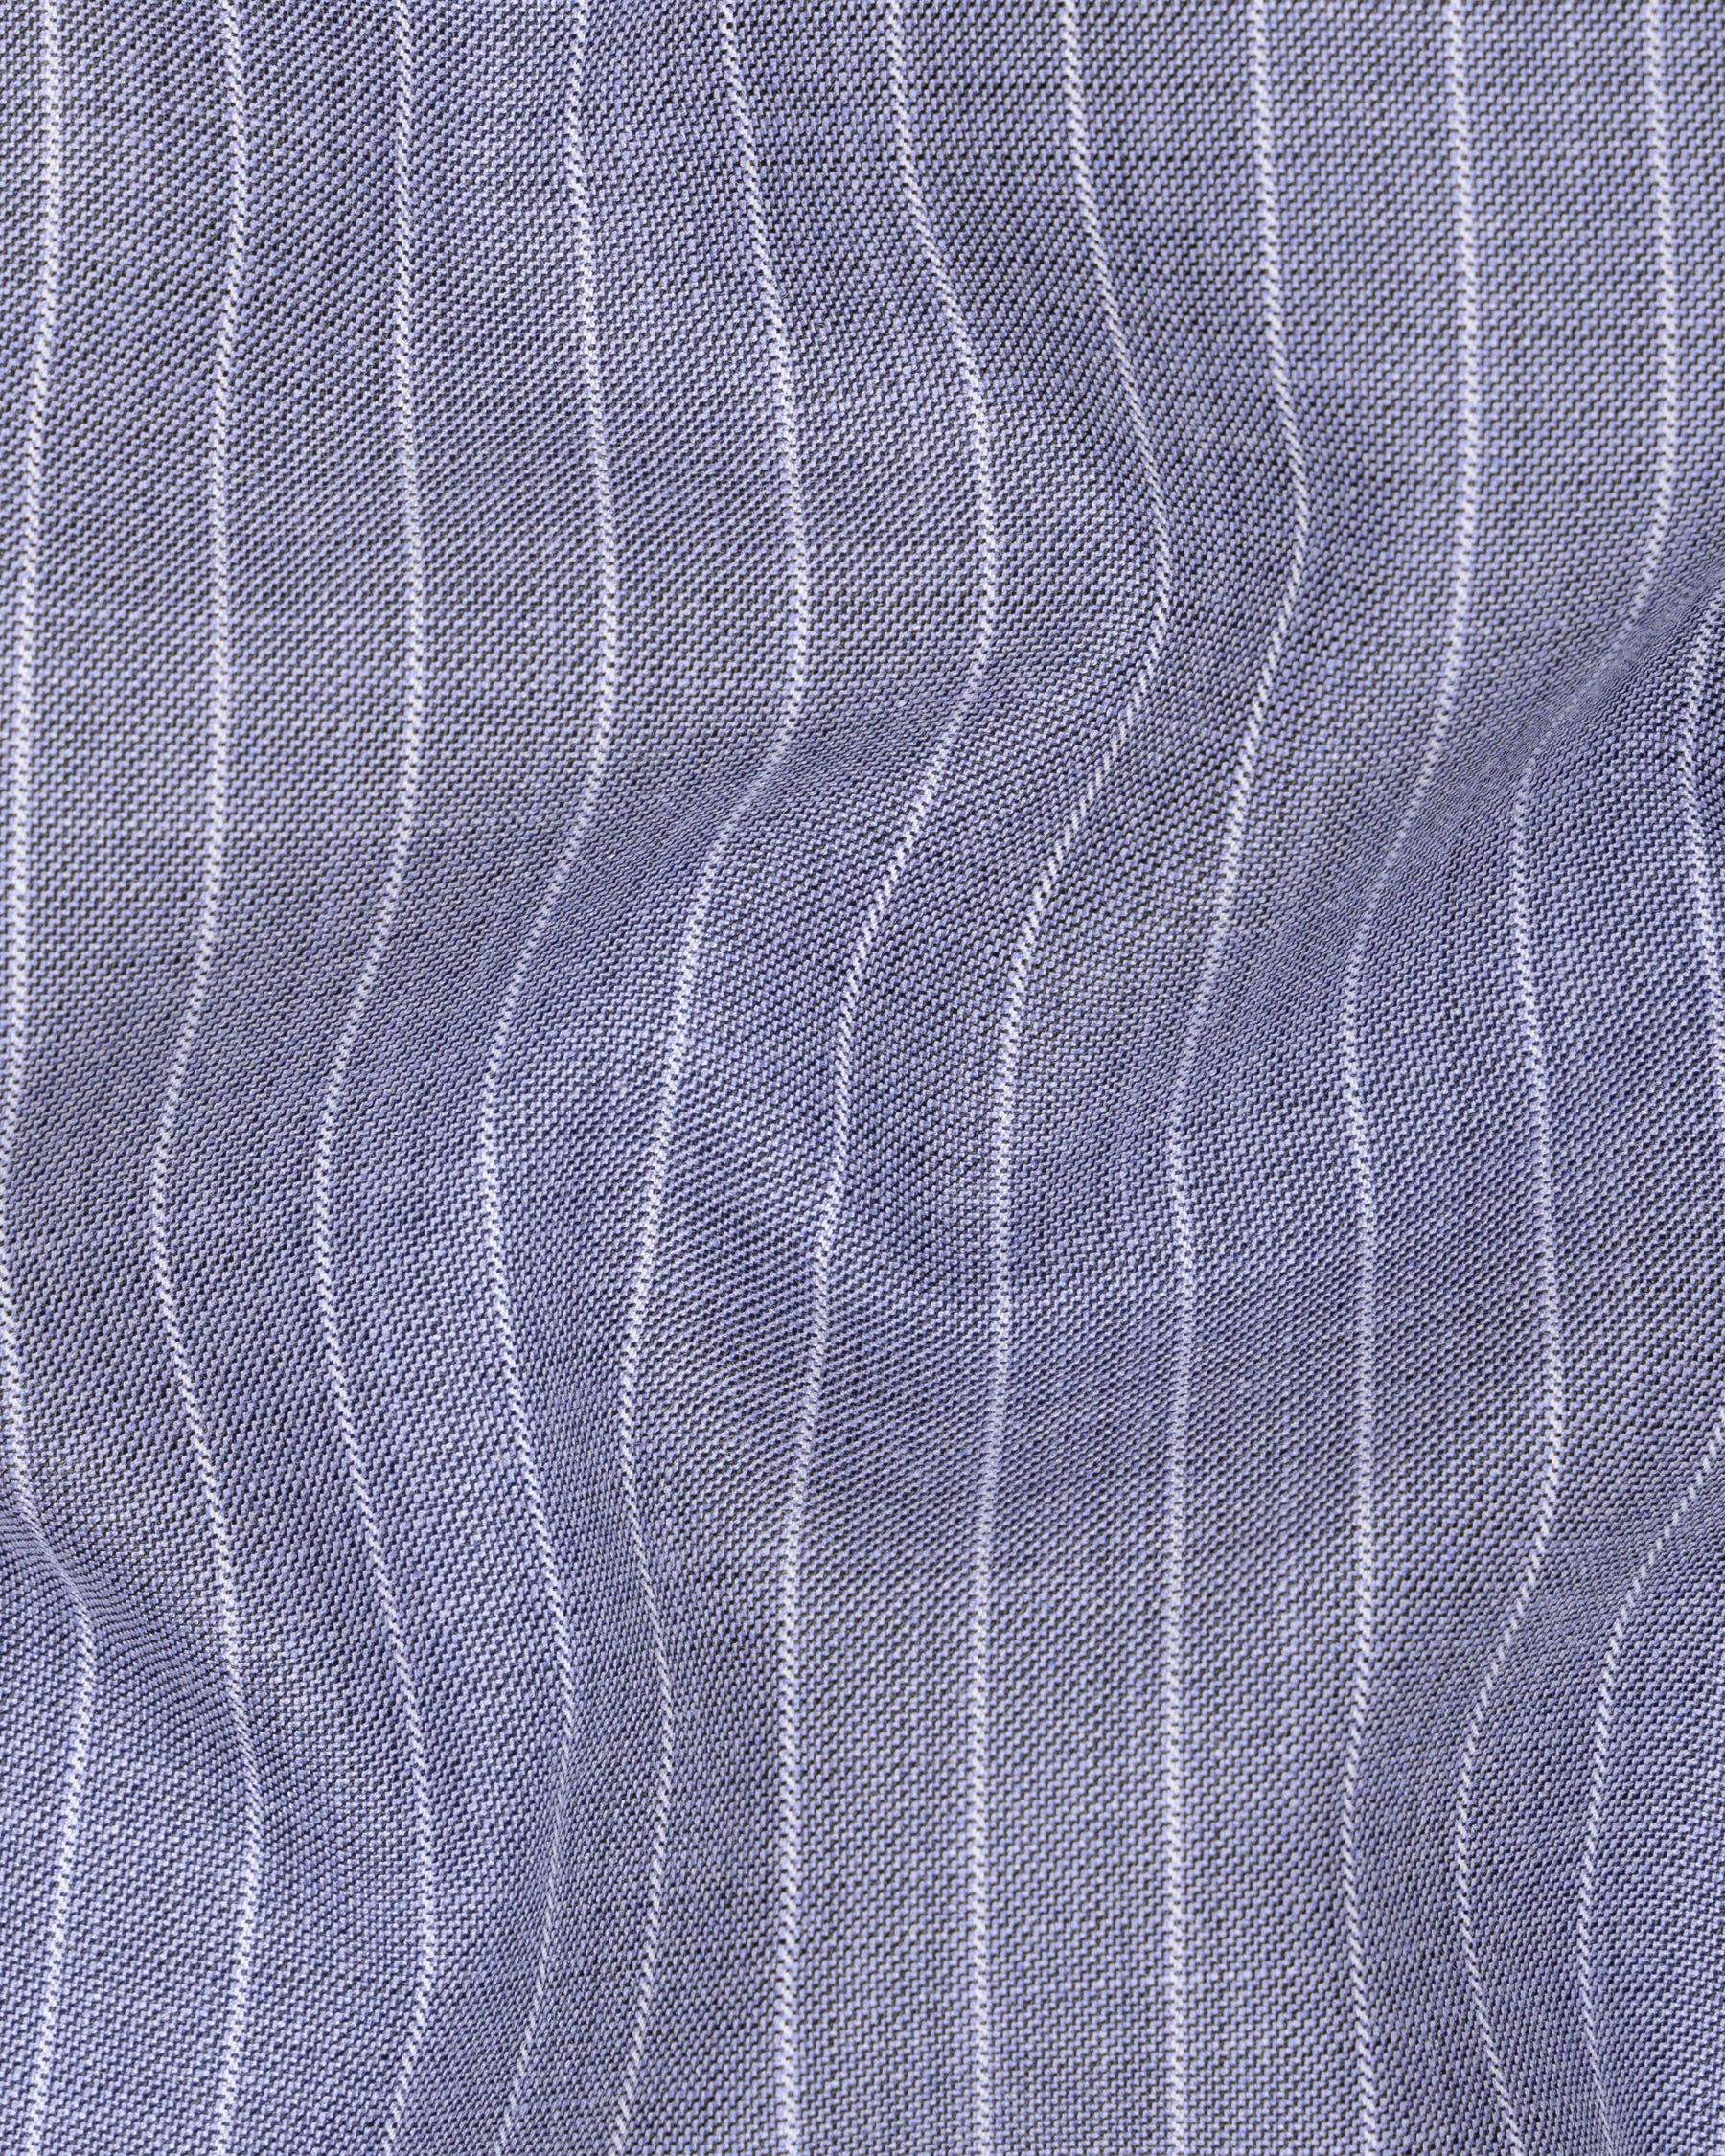 Glaucous Blue Striped Waistcoat